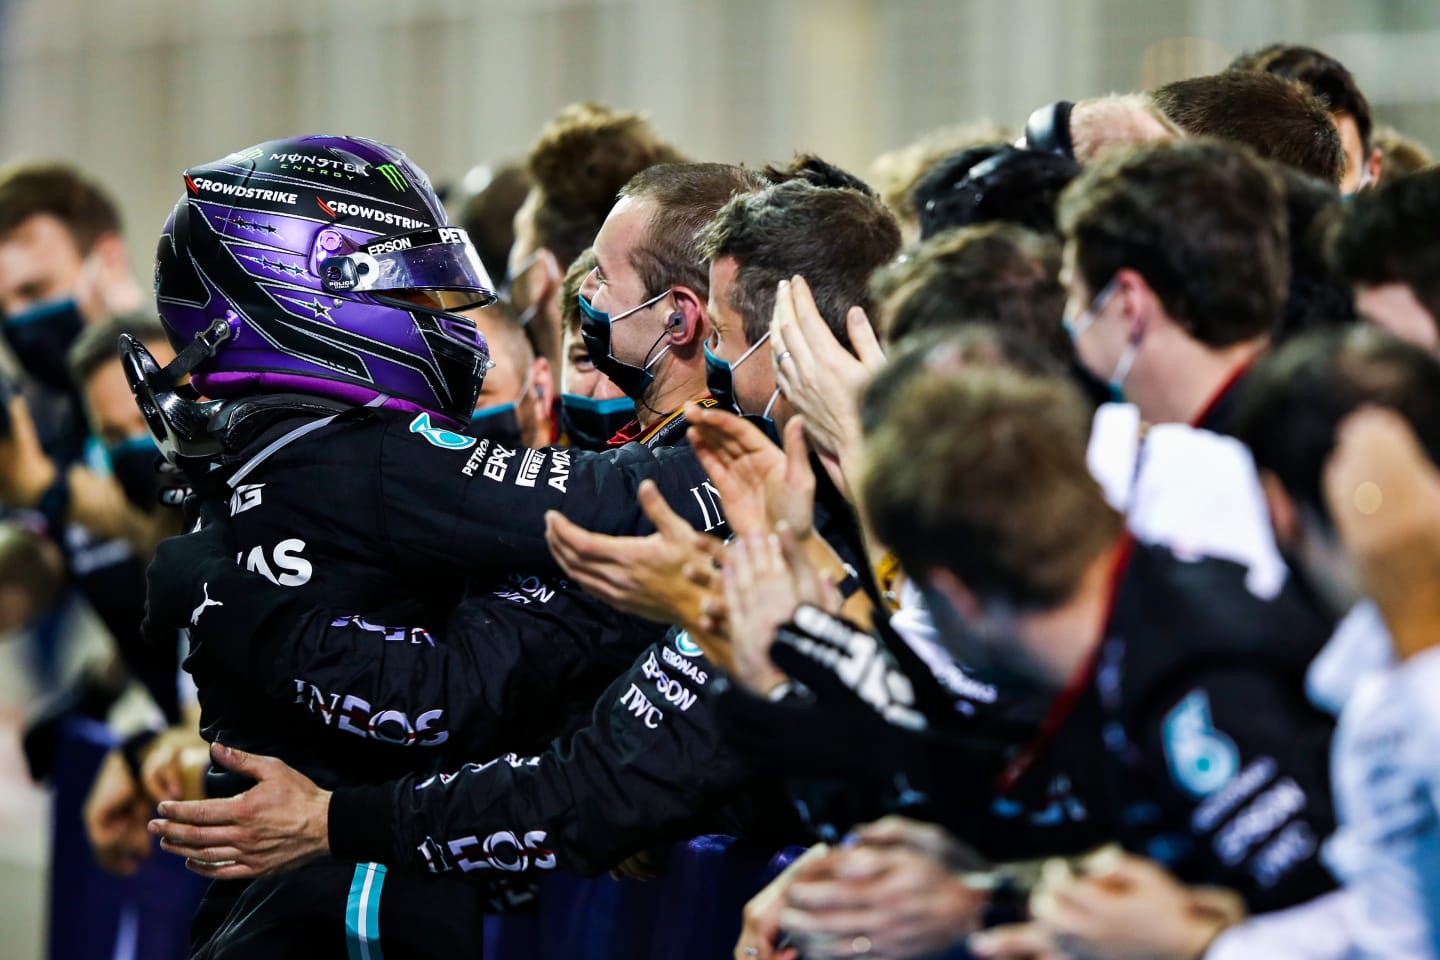 BAHRAIN, BAHRAIN - MARCH 28: Race winner Lewis Hamilton of Great Britain and Mercedes GP celebrates